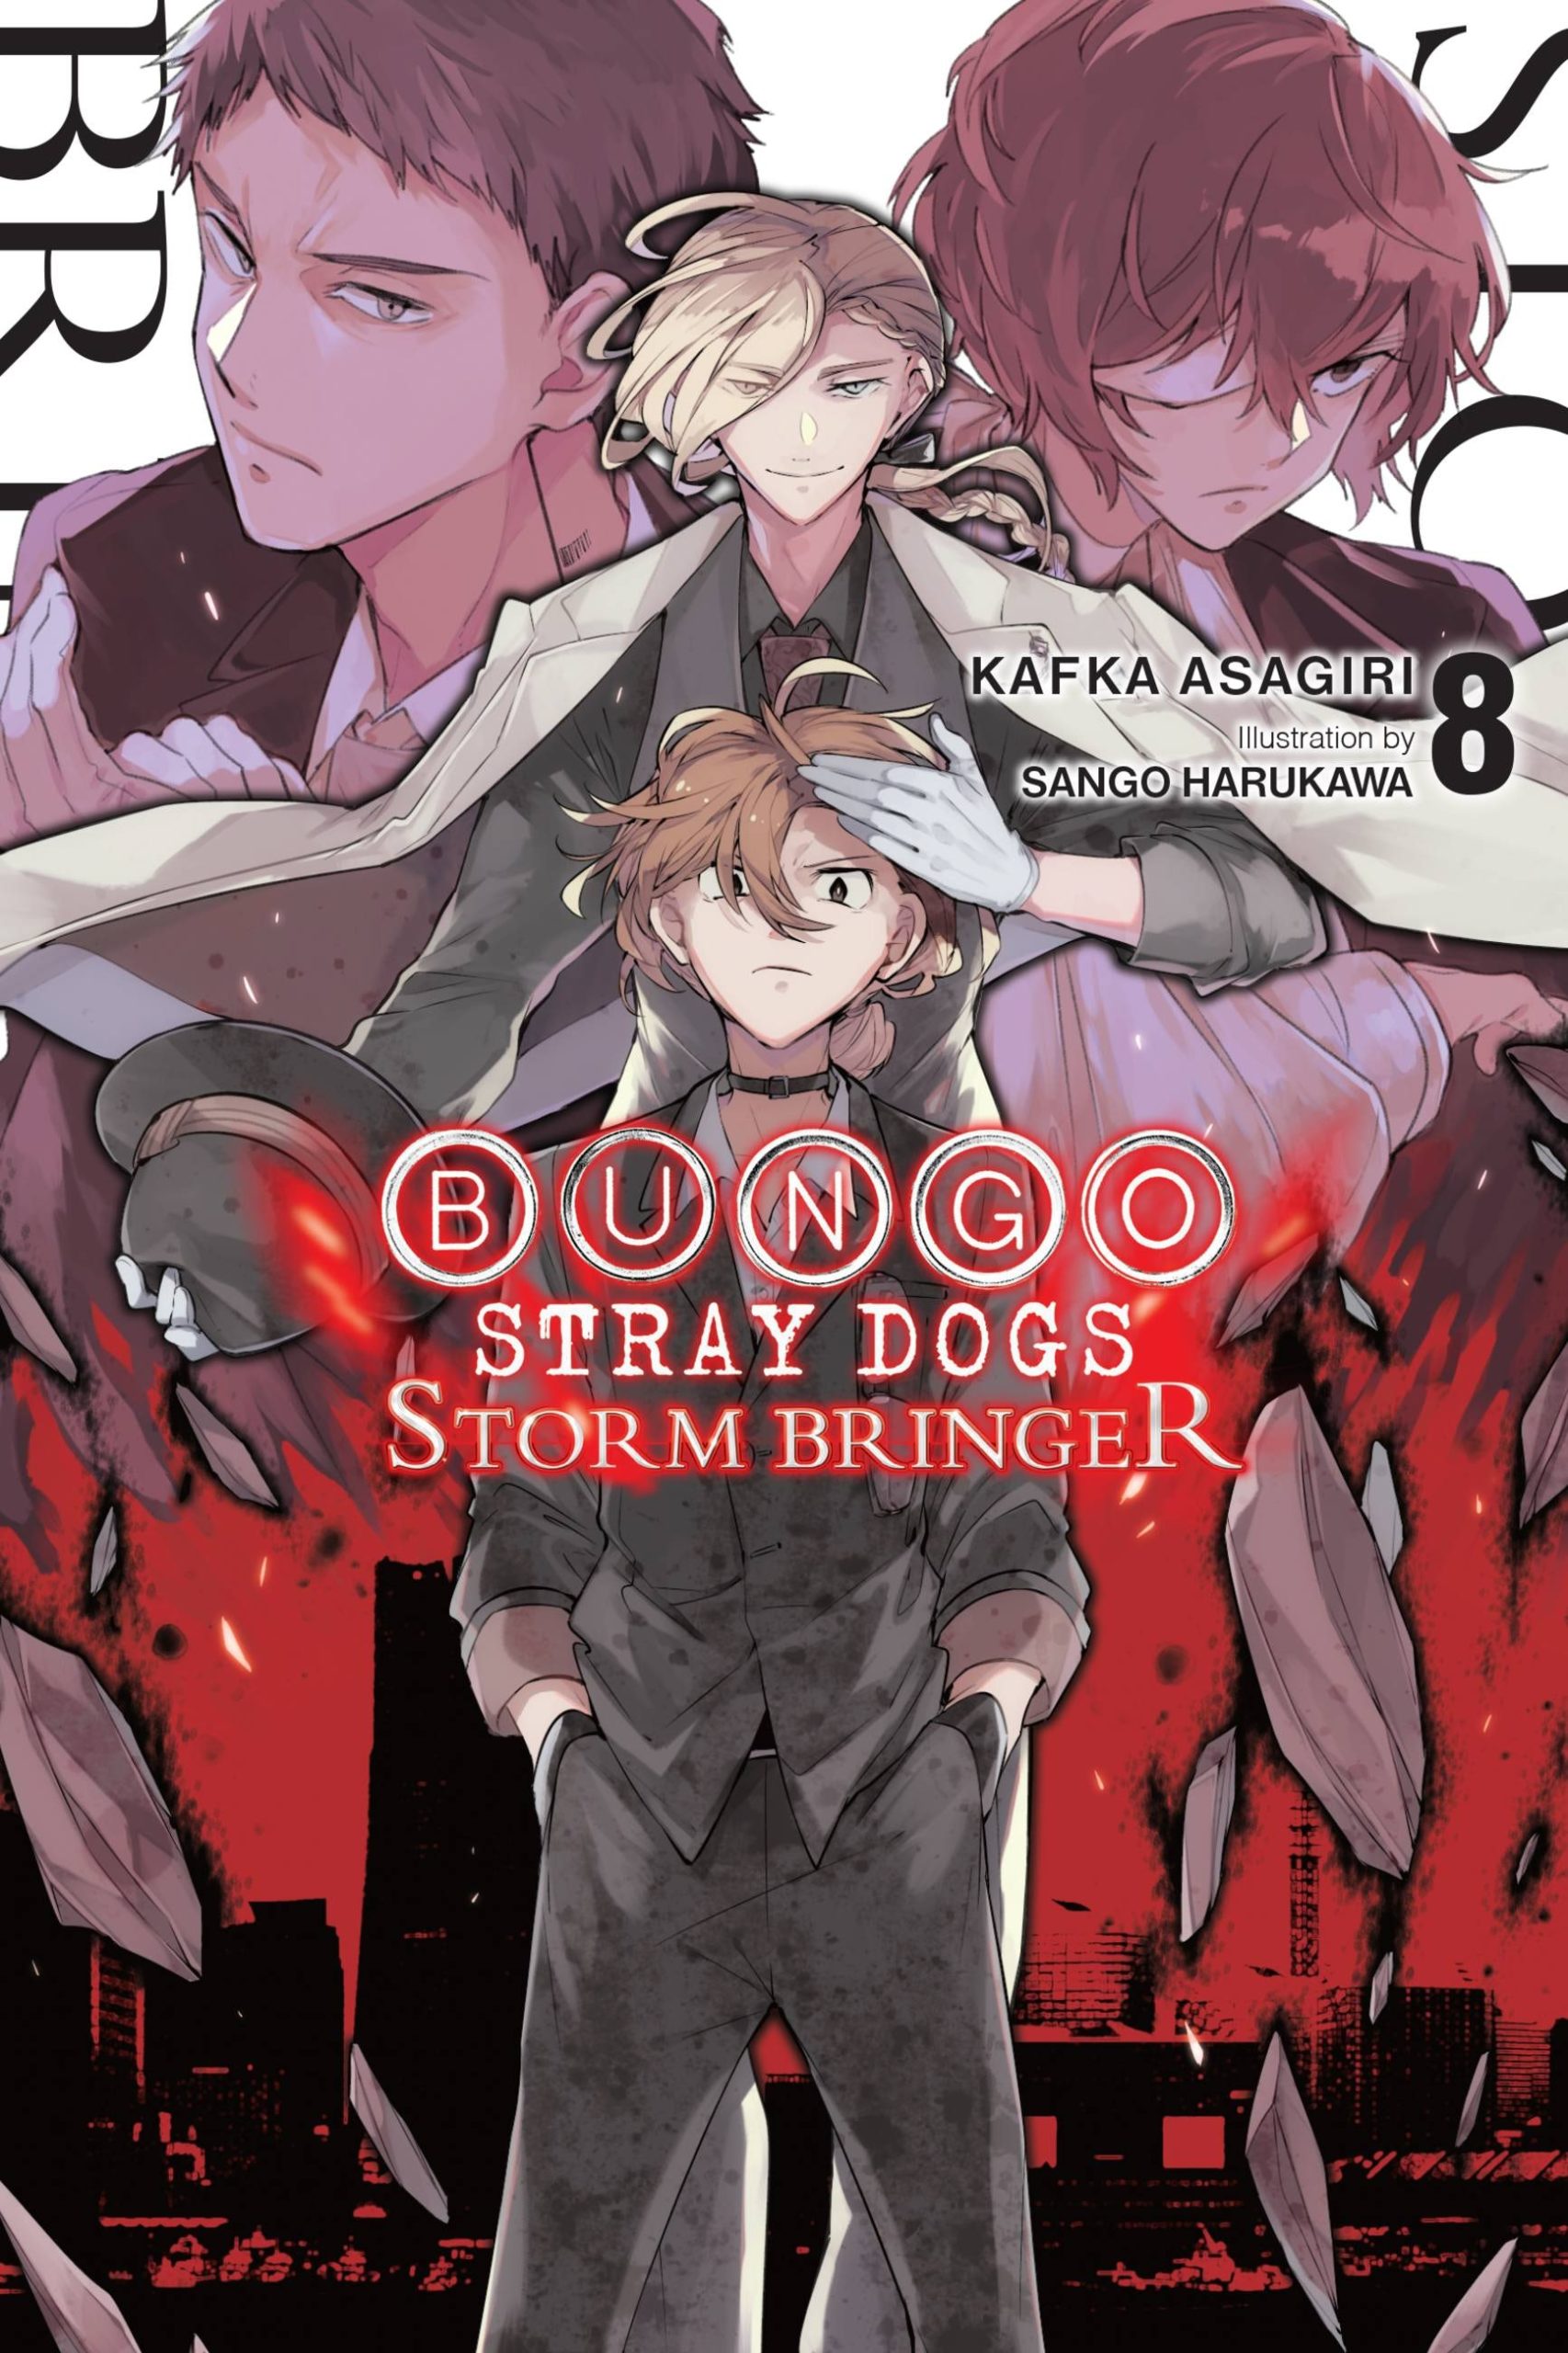 Born to Die - Bungo Stray Dogs' Karma - I drink and watch anime